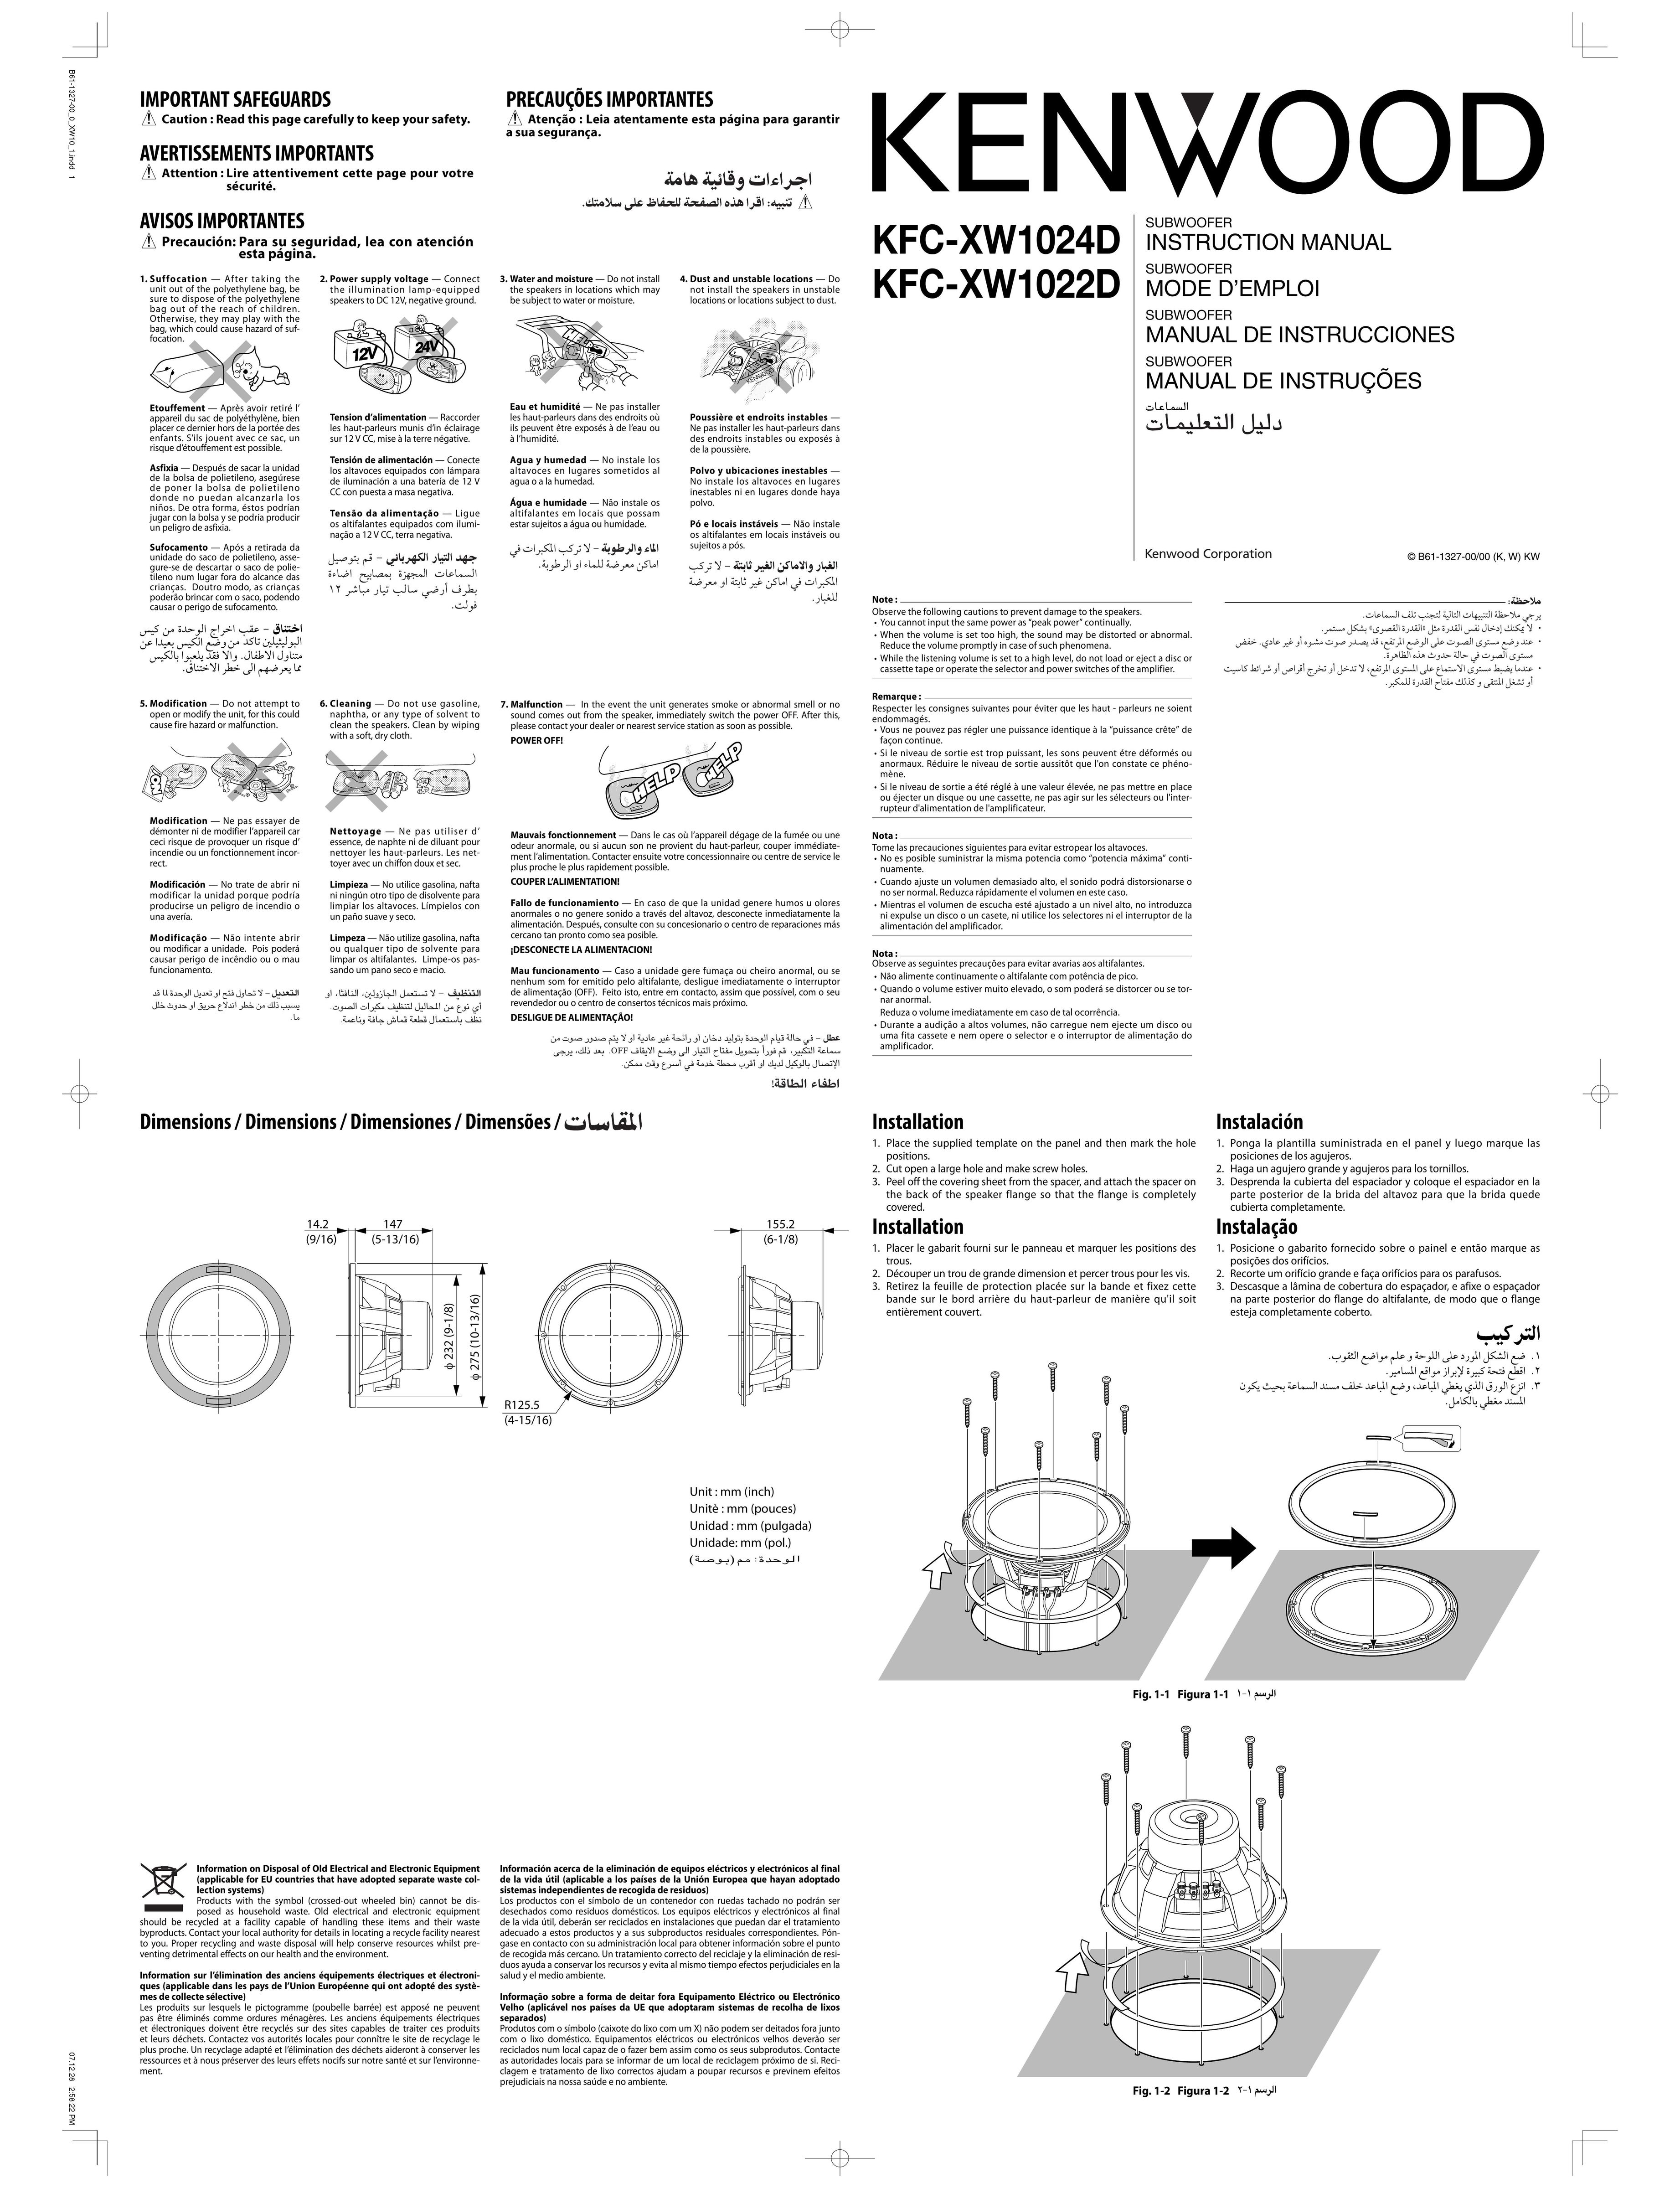 Kenwood KFC-XW1024D Speaker User Manual